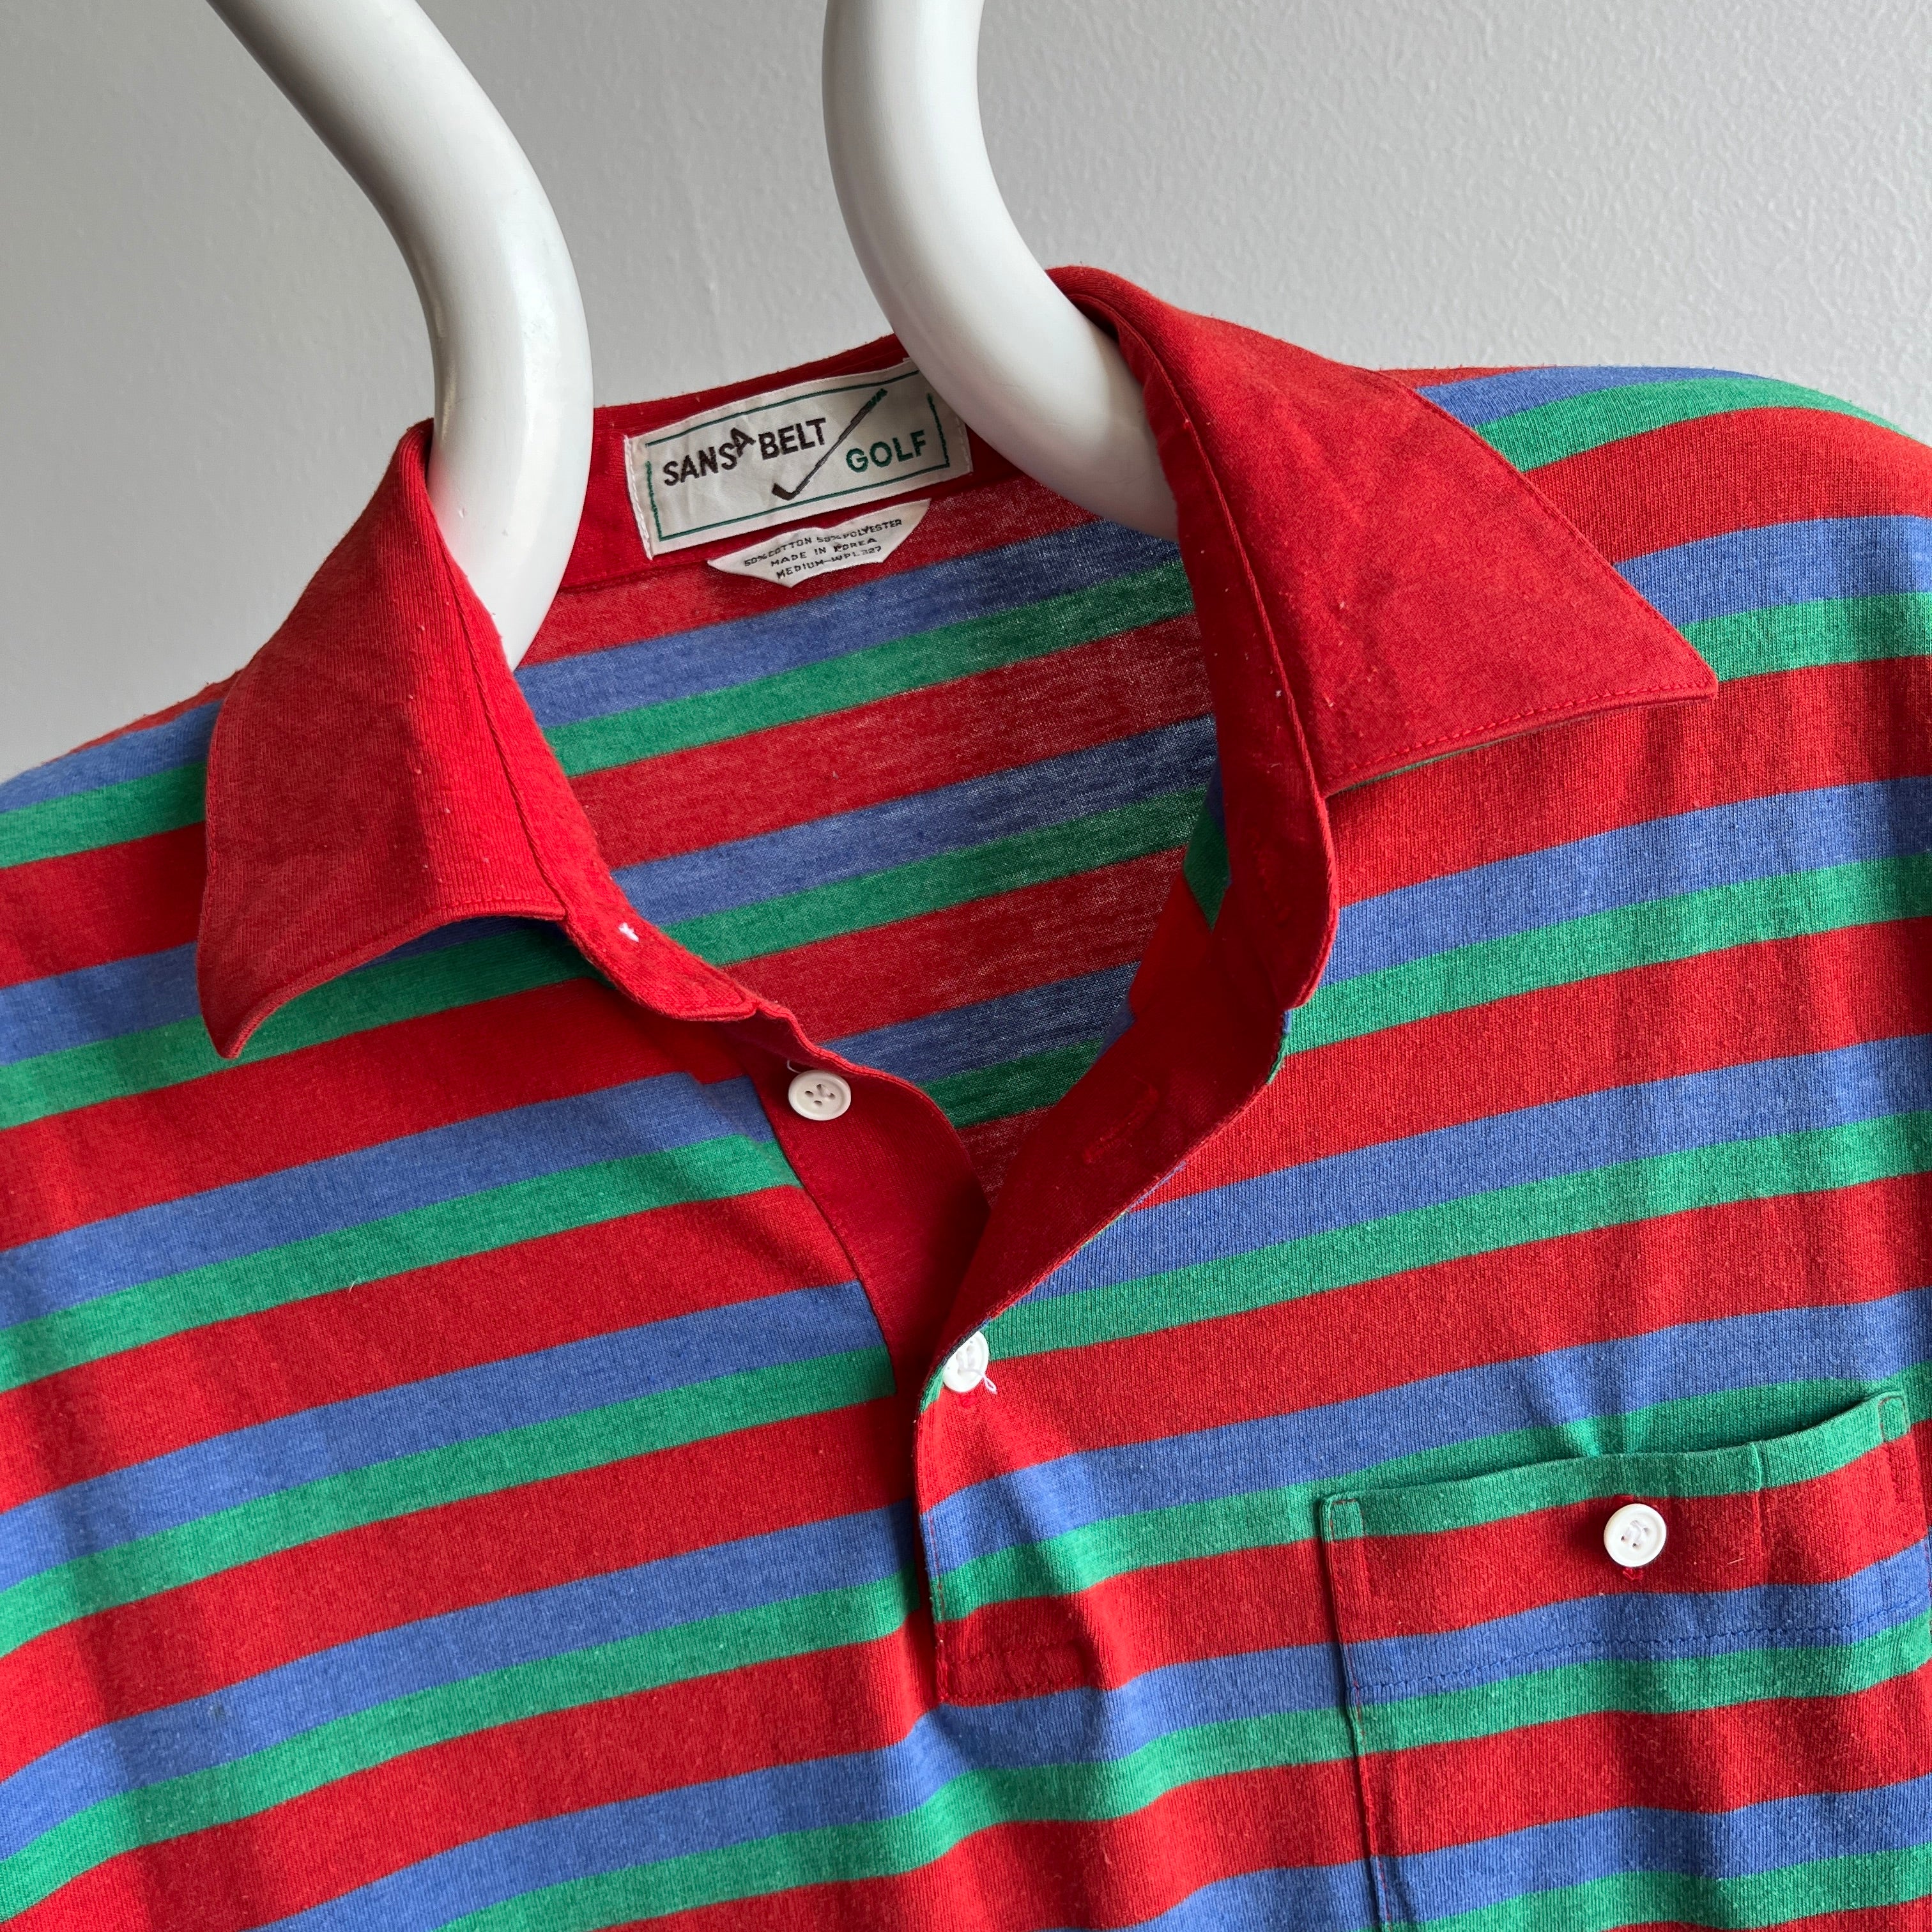 1980s Striped Polo Pocket T-Shirt